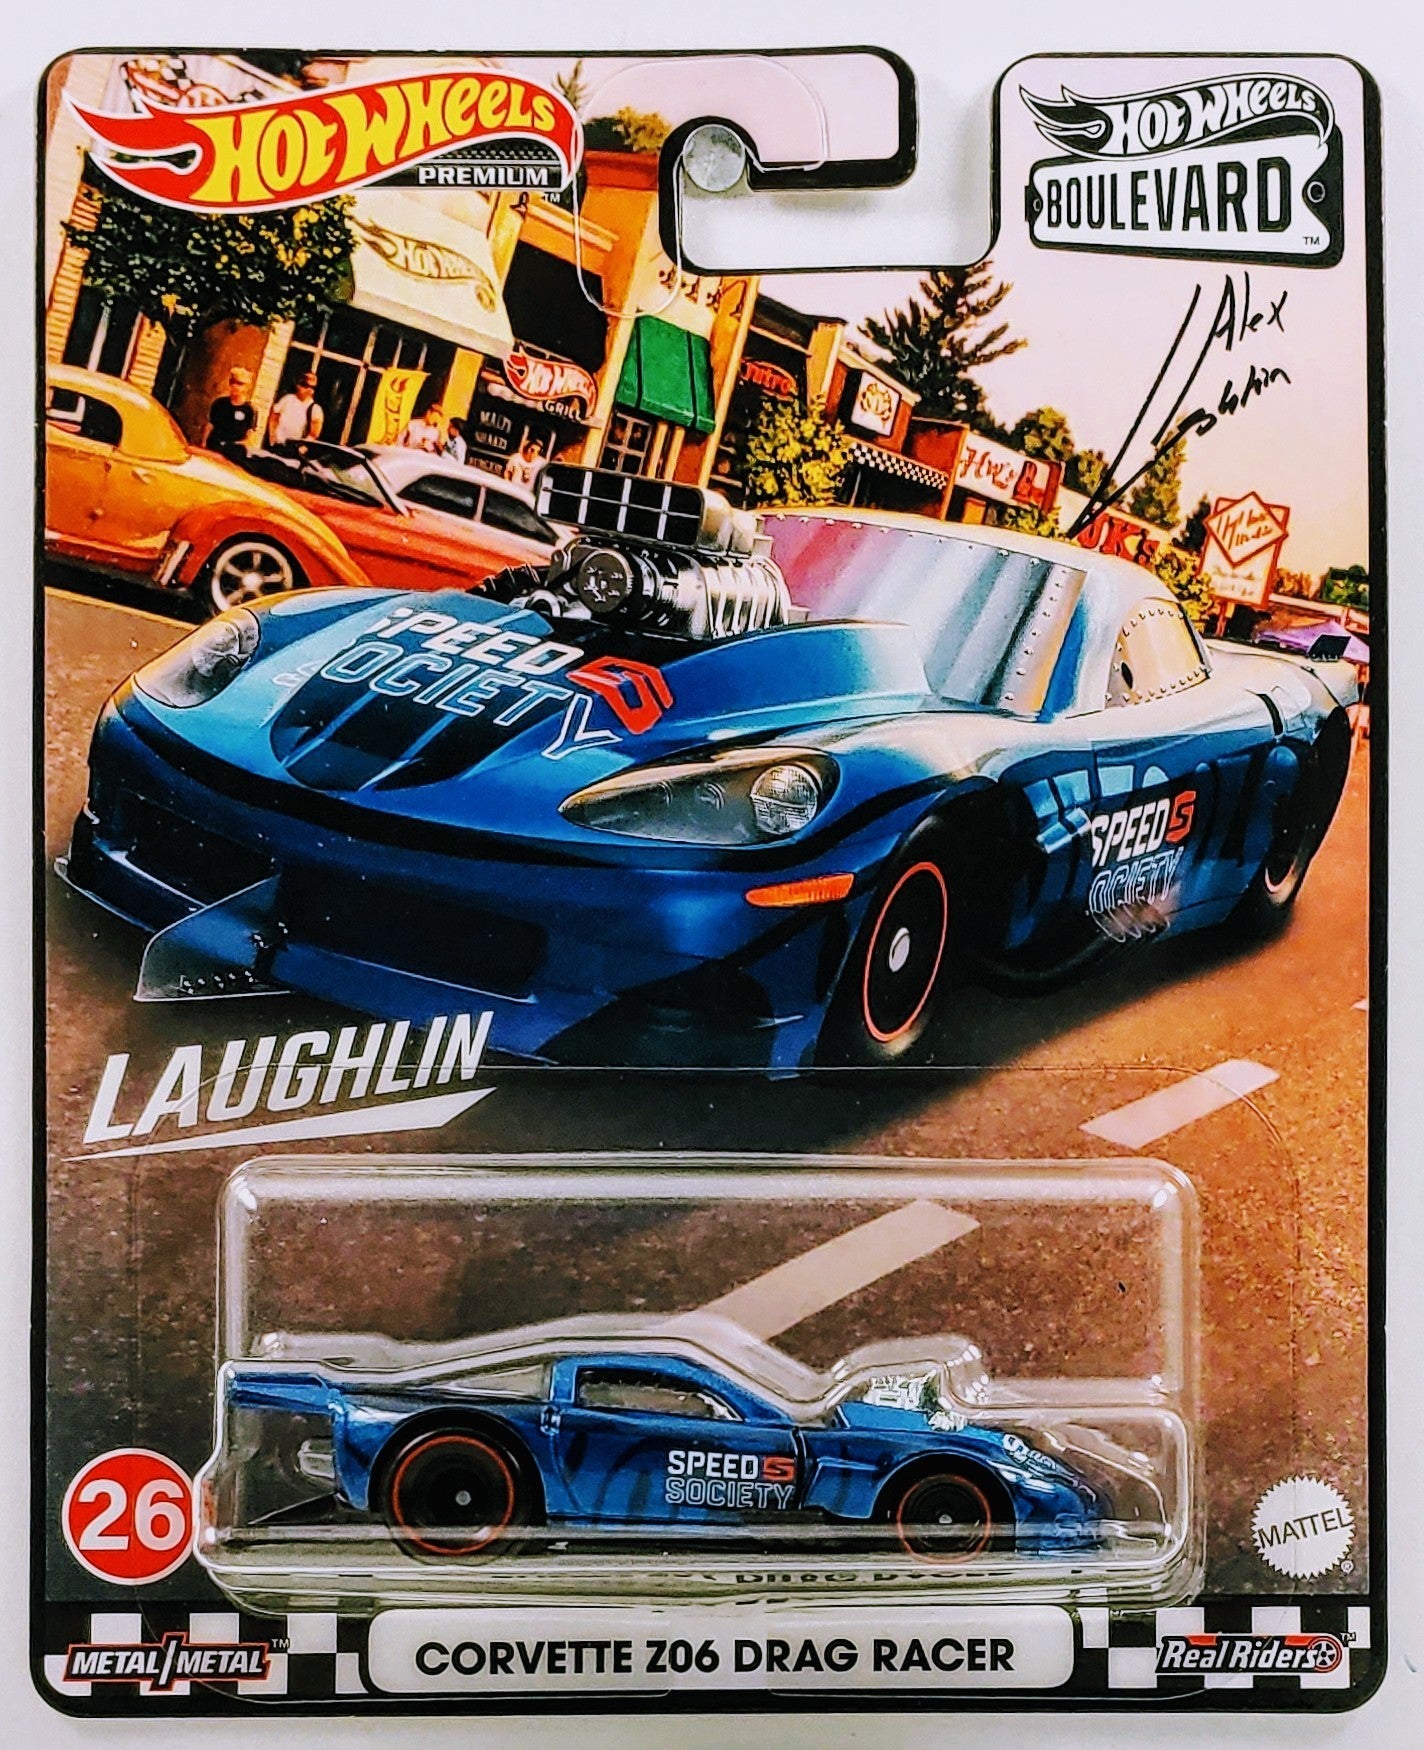 Hot Wheels 2021 - Premium / Boulevard # 26 - Corvette Z06 Drag Racer - Blue - Metal/Metal & Real Riders - New Casting - Walmart Exclusive